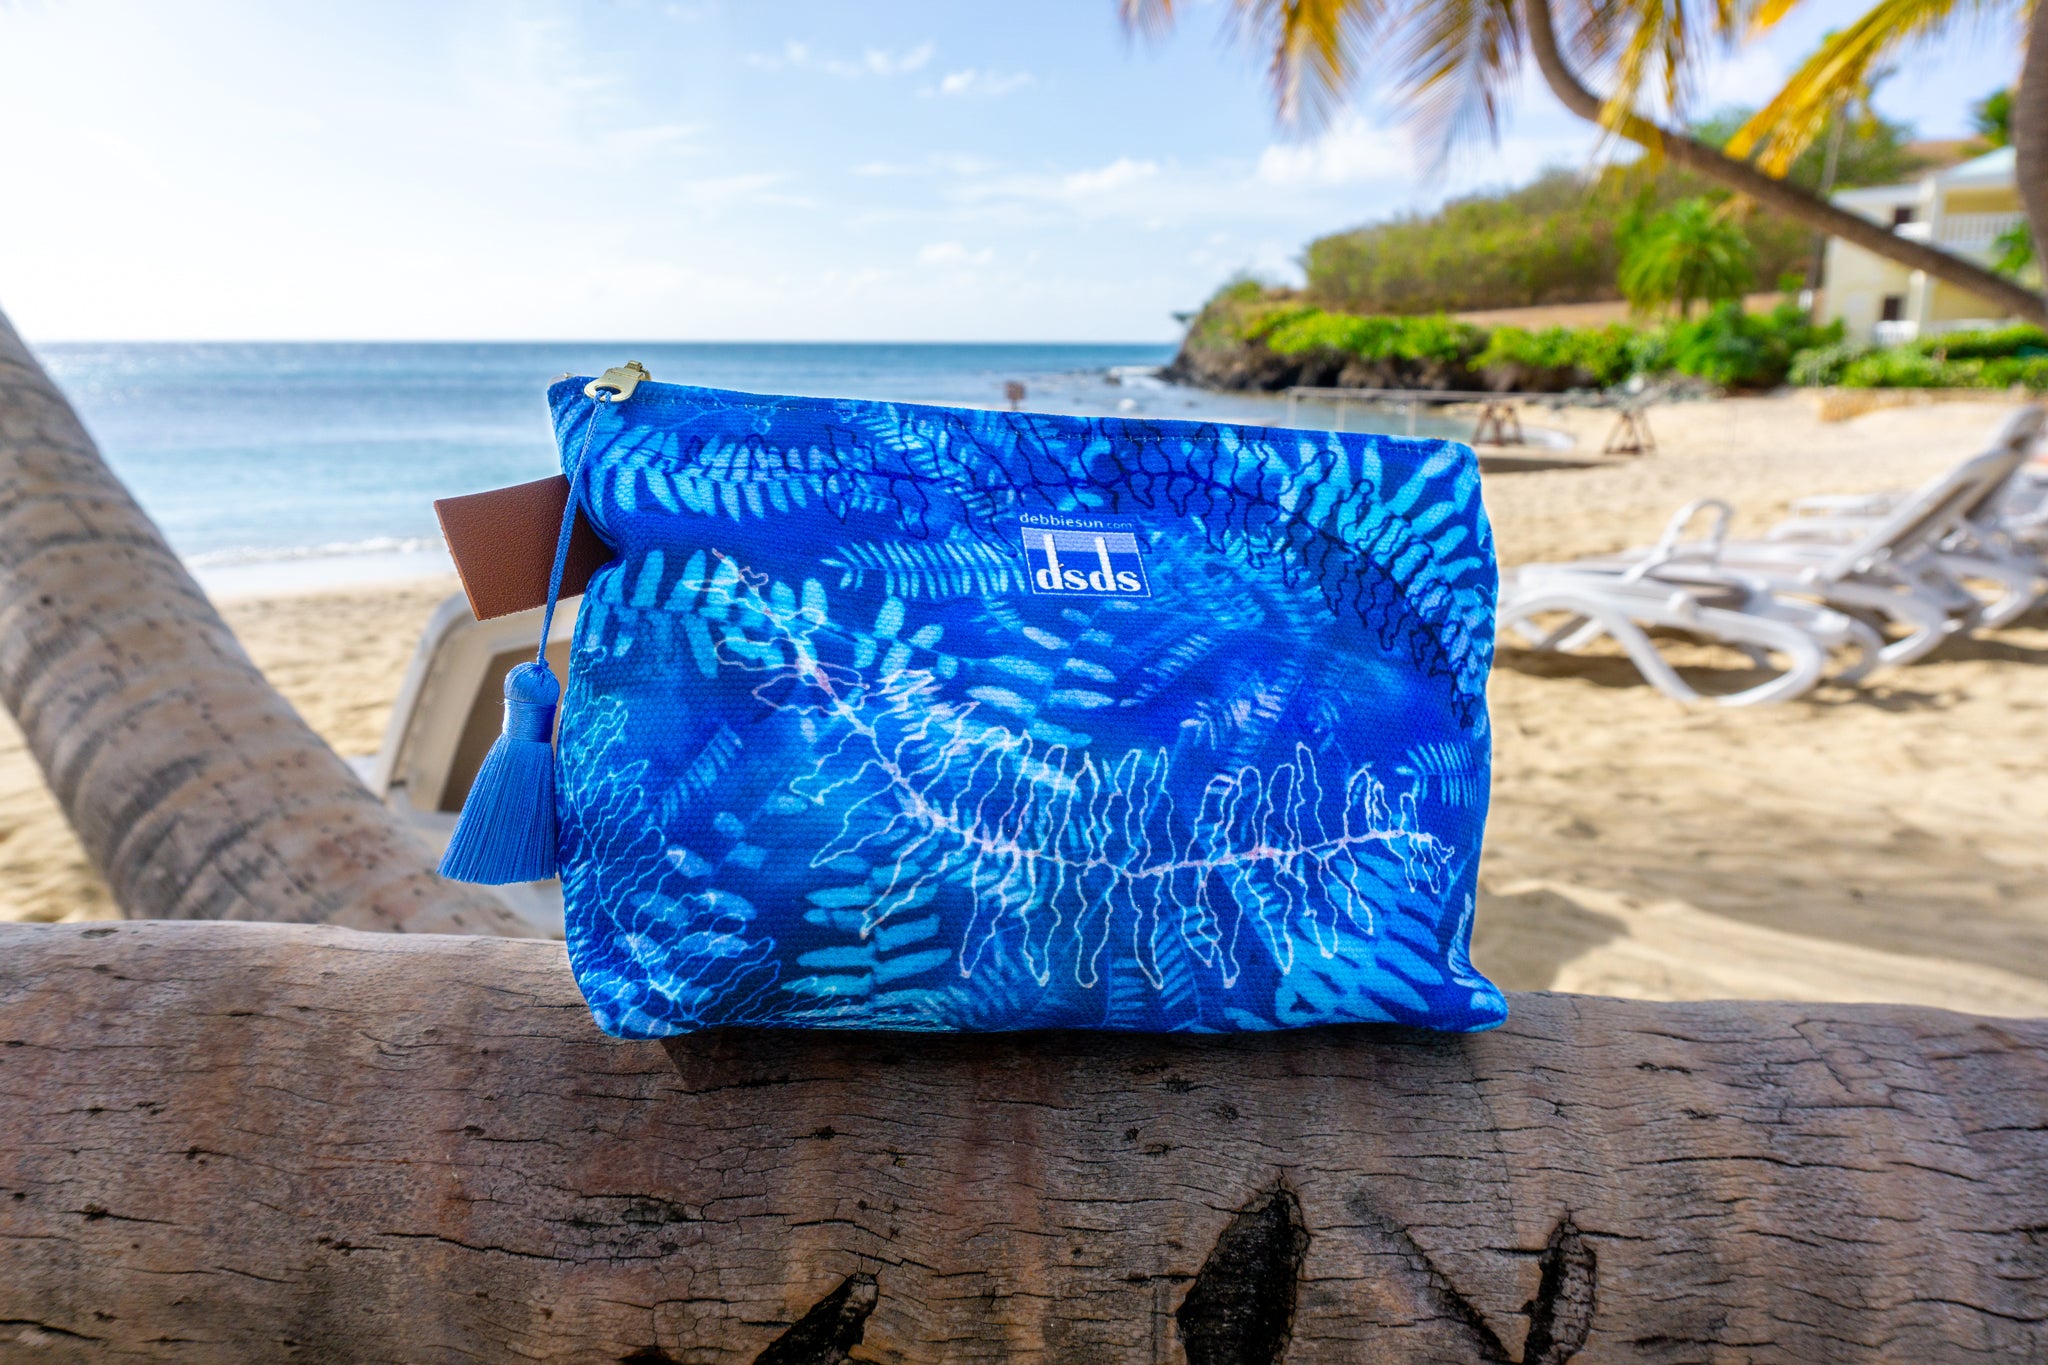 Blue fern patterned zipper pouch on the beach